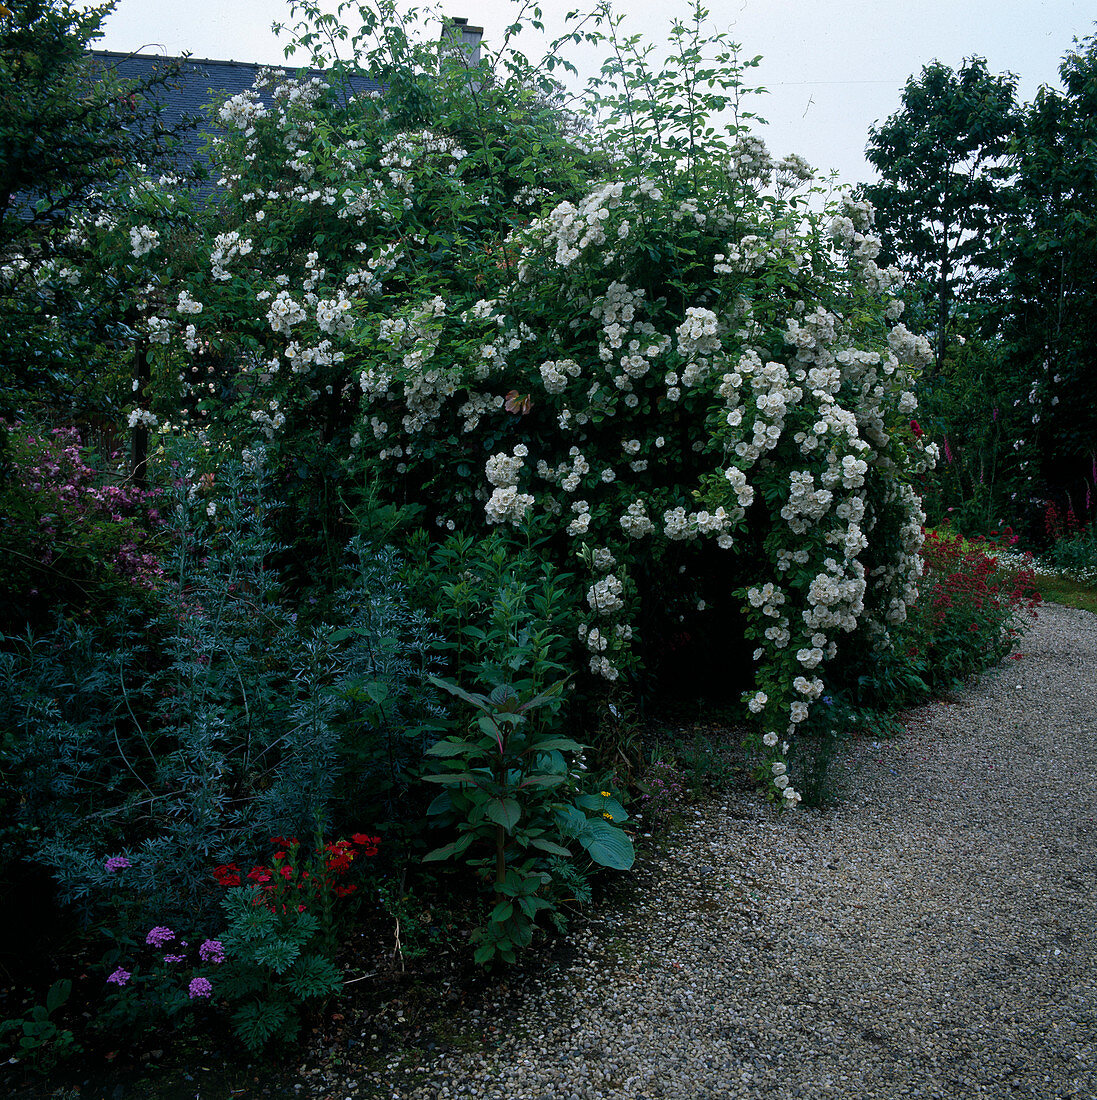 Rosa 'Astra Desmond' multiflora rose with delicate orange fragrance, Artemisia (wormwood), gravel path